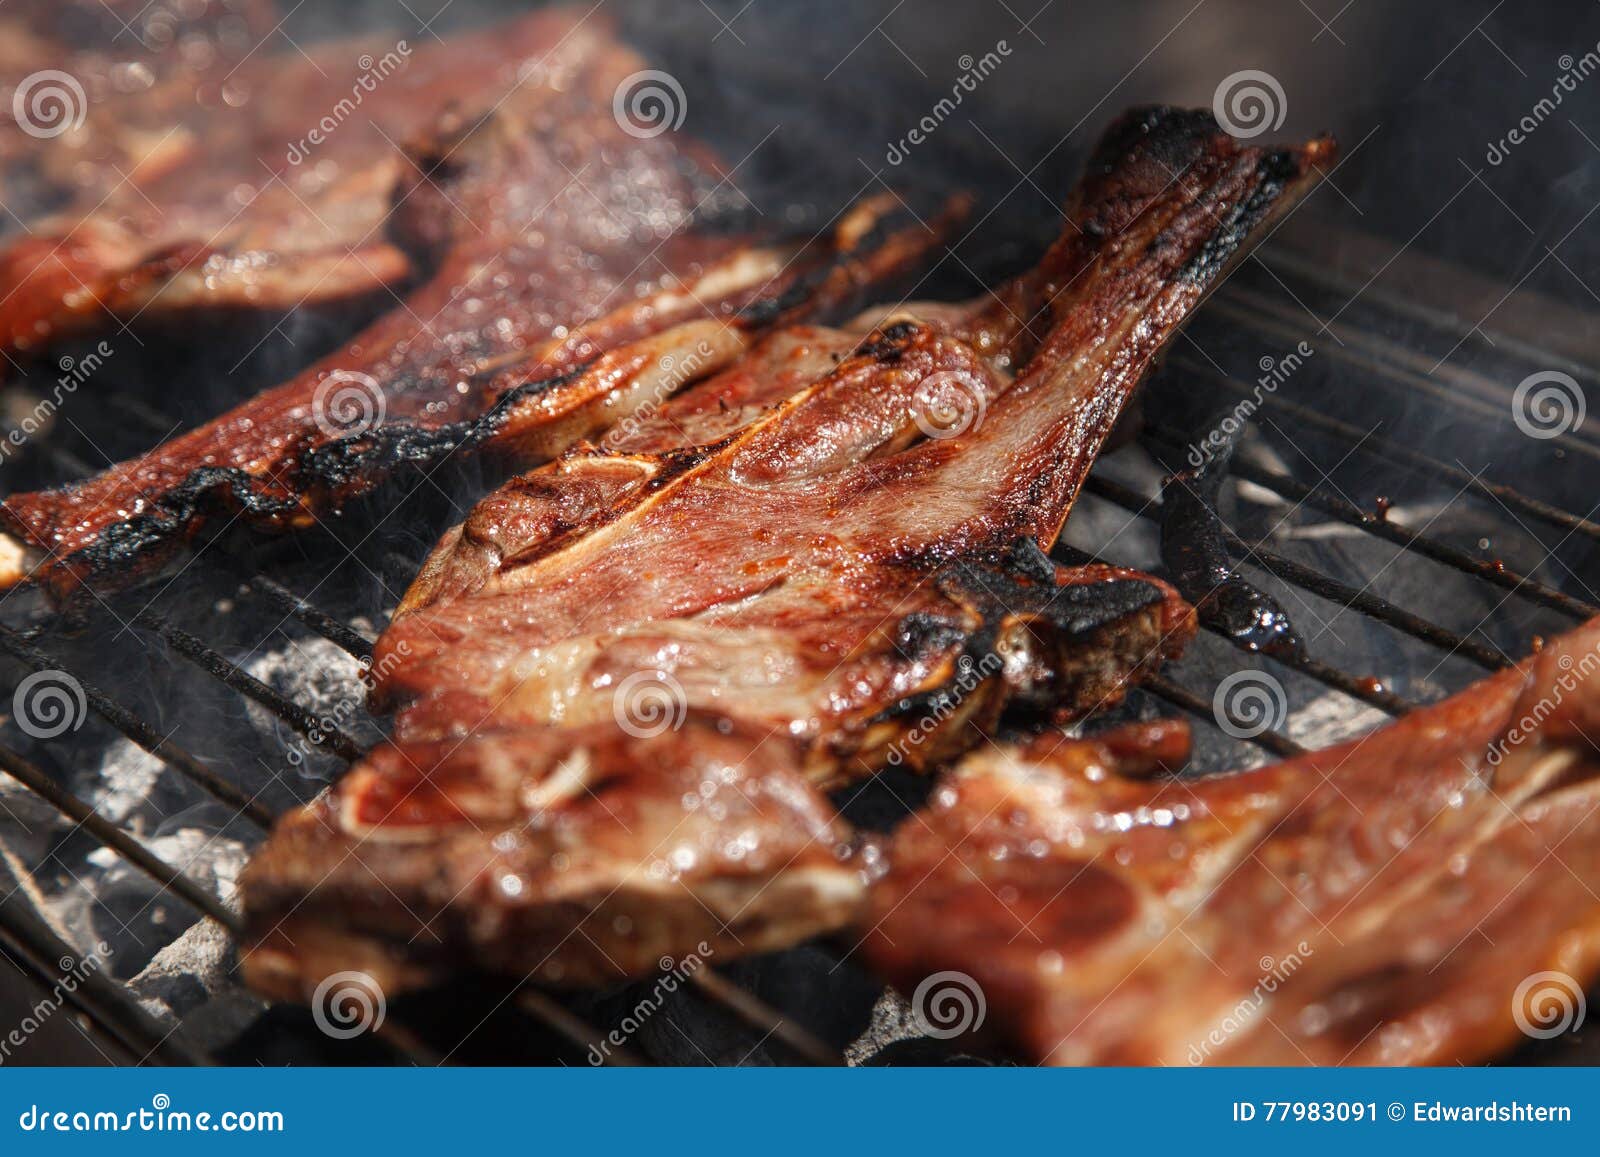 roast lamb steak on the grill.